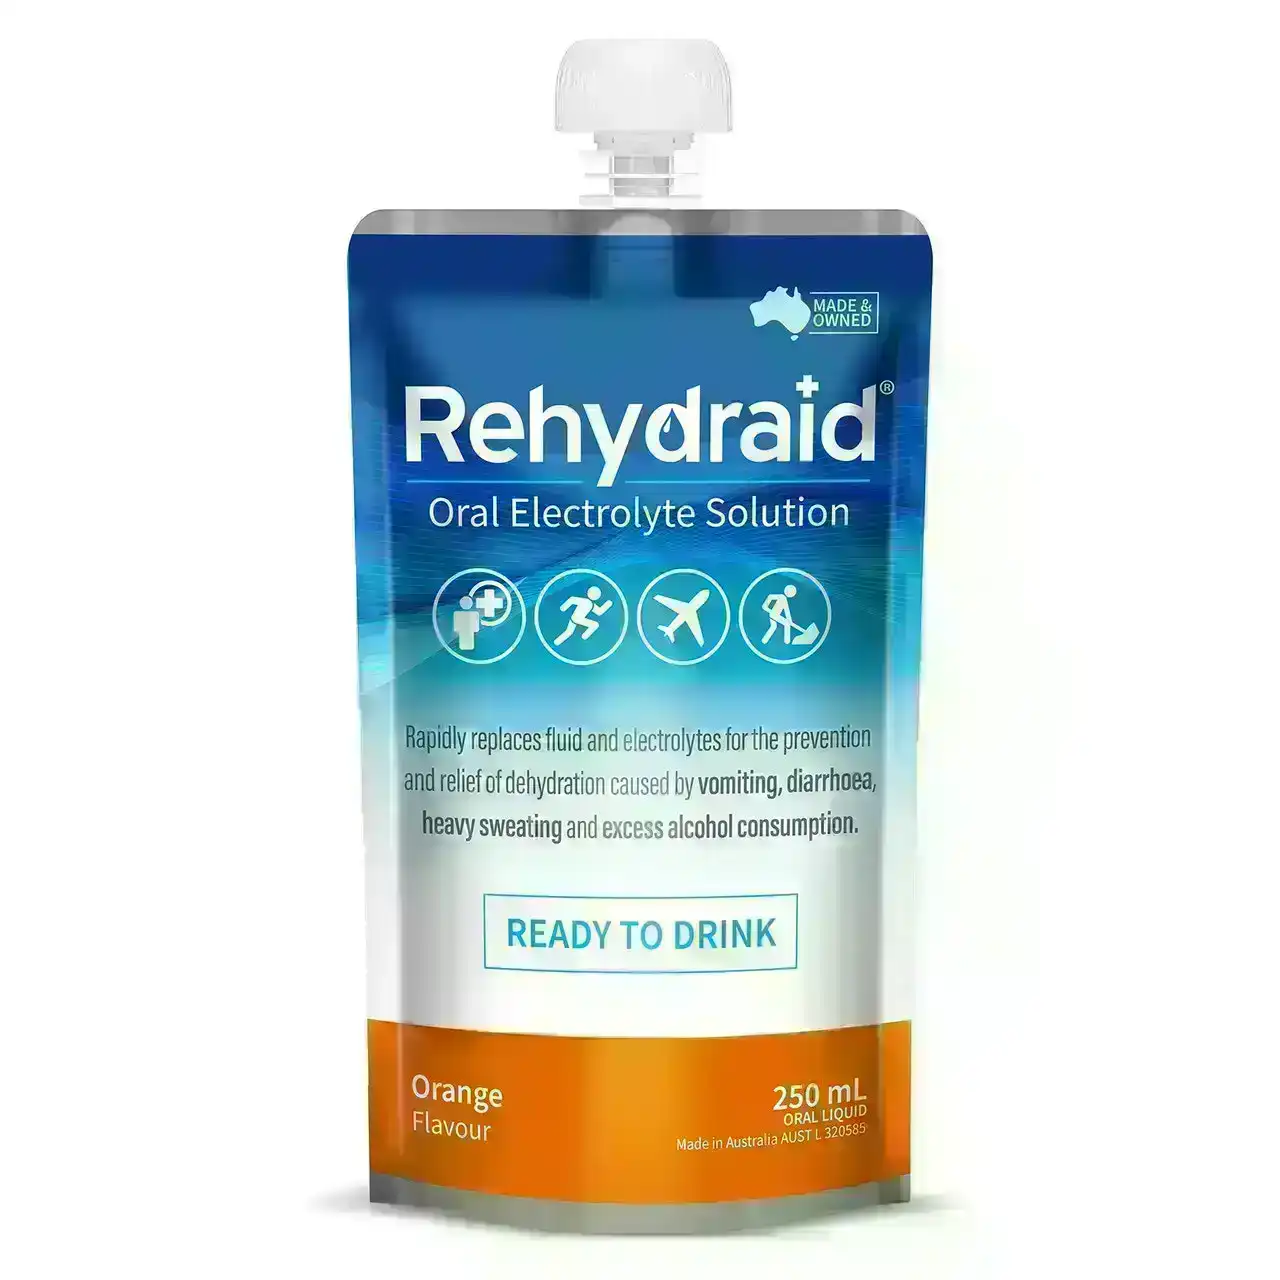 Rehydraid Oral Electrolyte Solution Orange Flavour 250ml